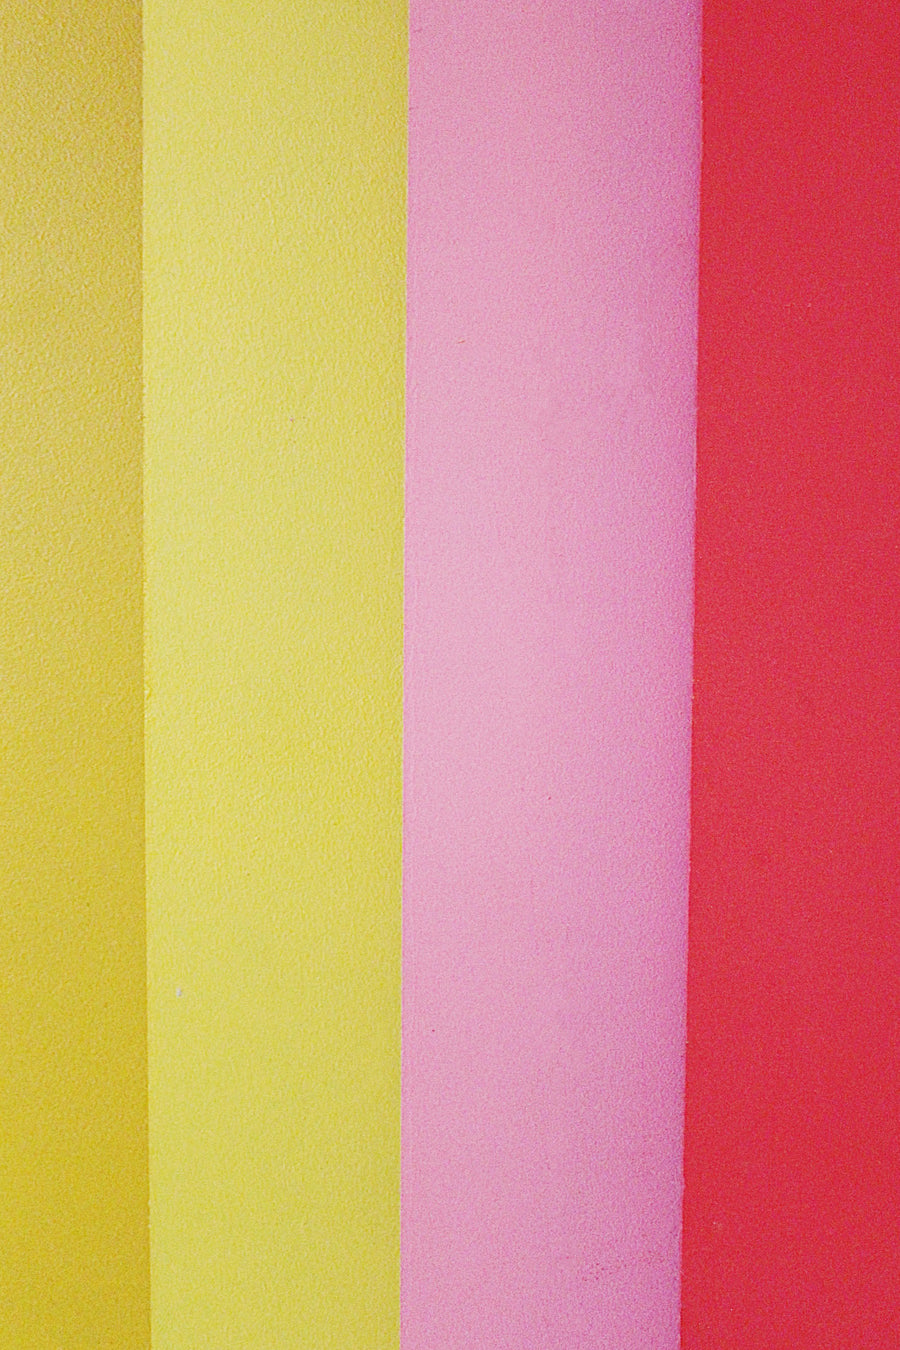 Coloured Panels